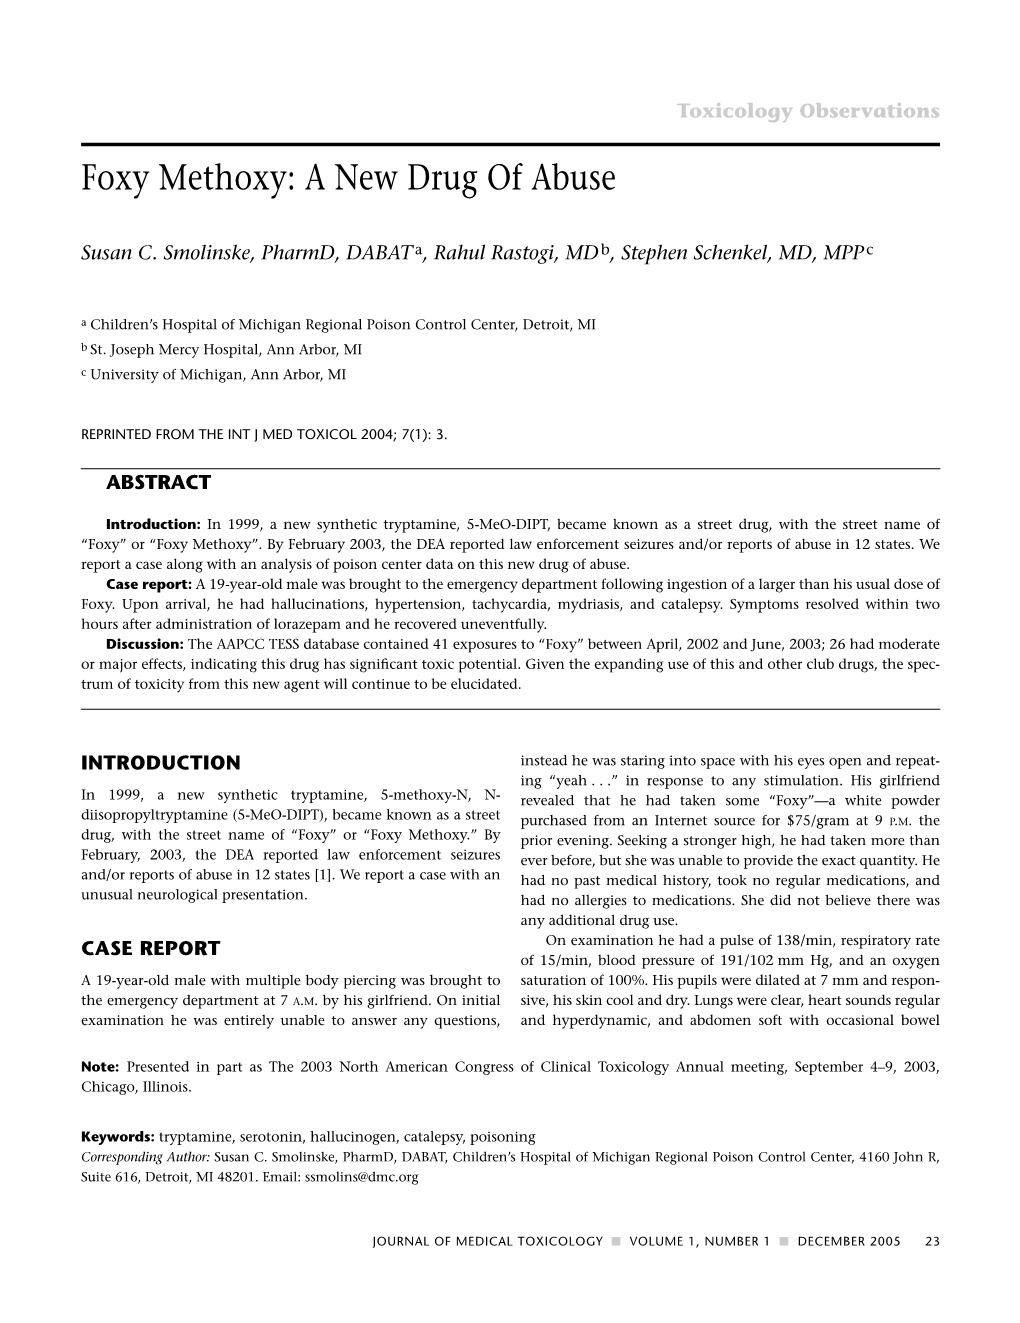 Foxy Methoxy: a New Drug of Abuse